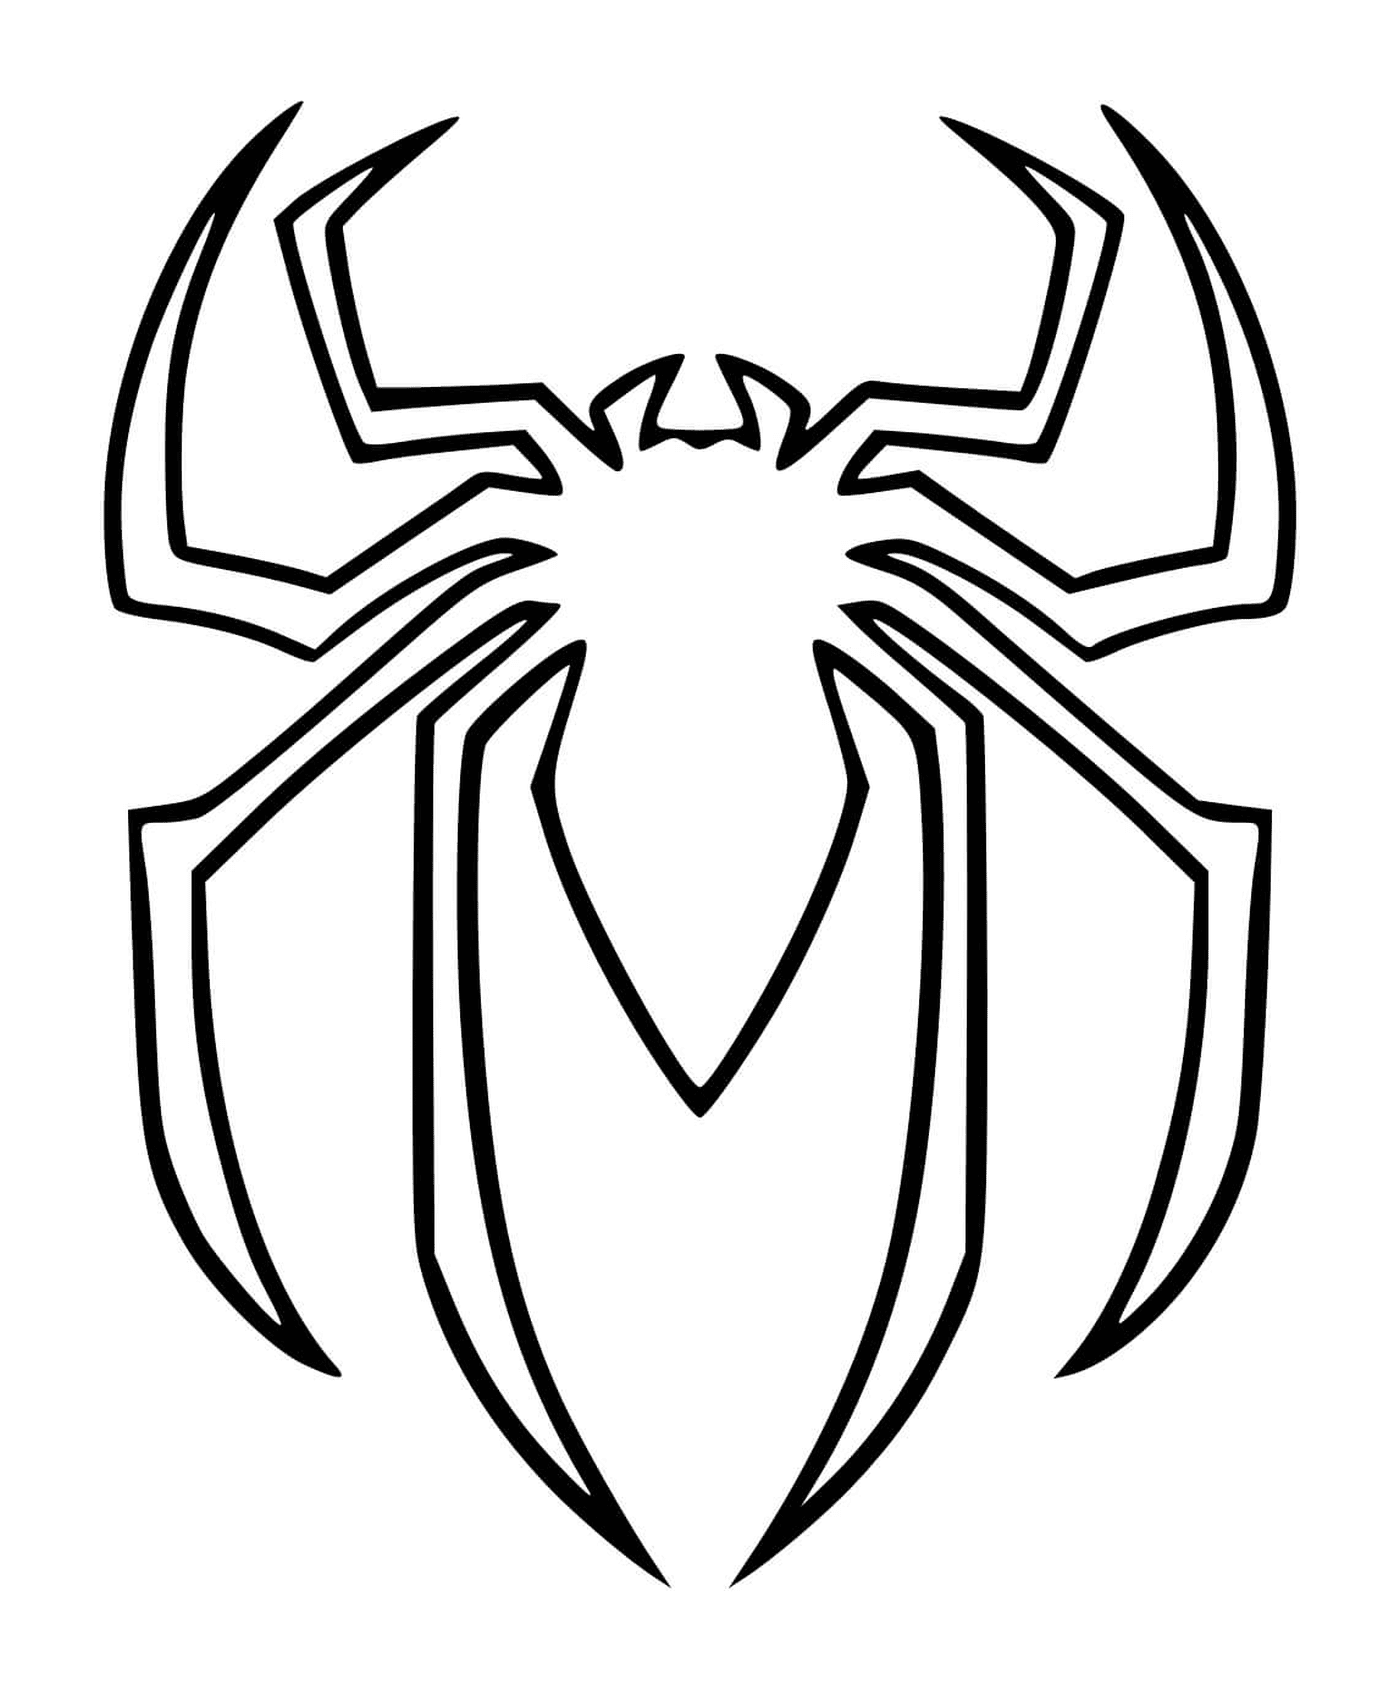  Фотография логотипа Человека-паука 